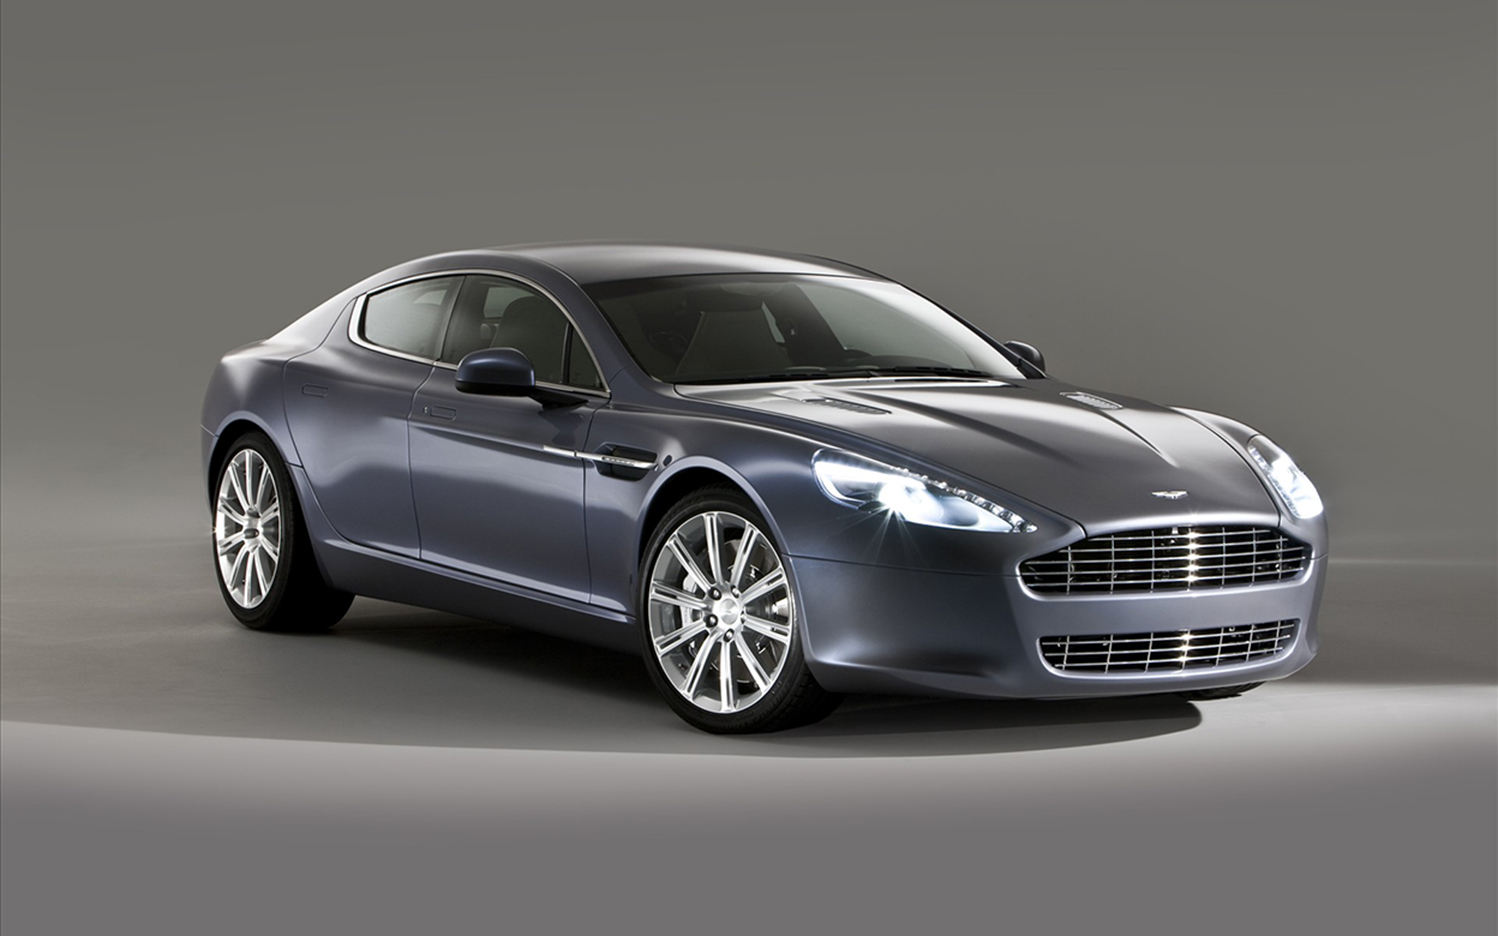 New car review: Aston Martin Rapide (2010-2013)